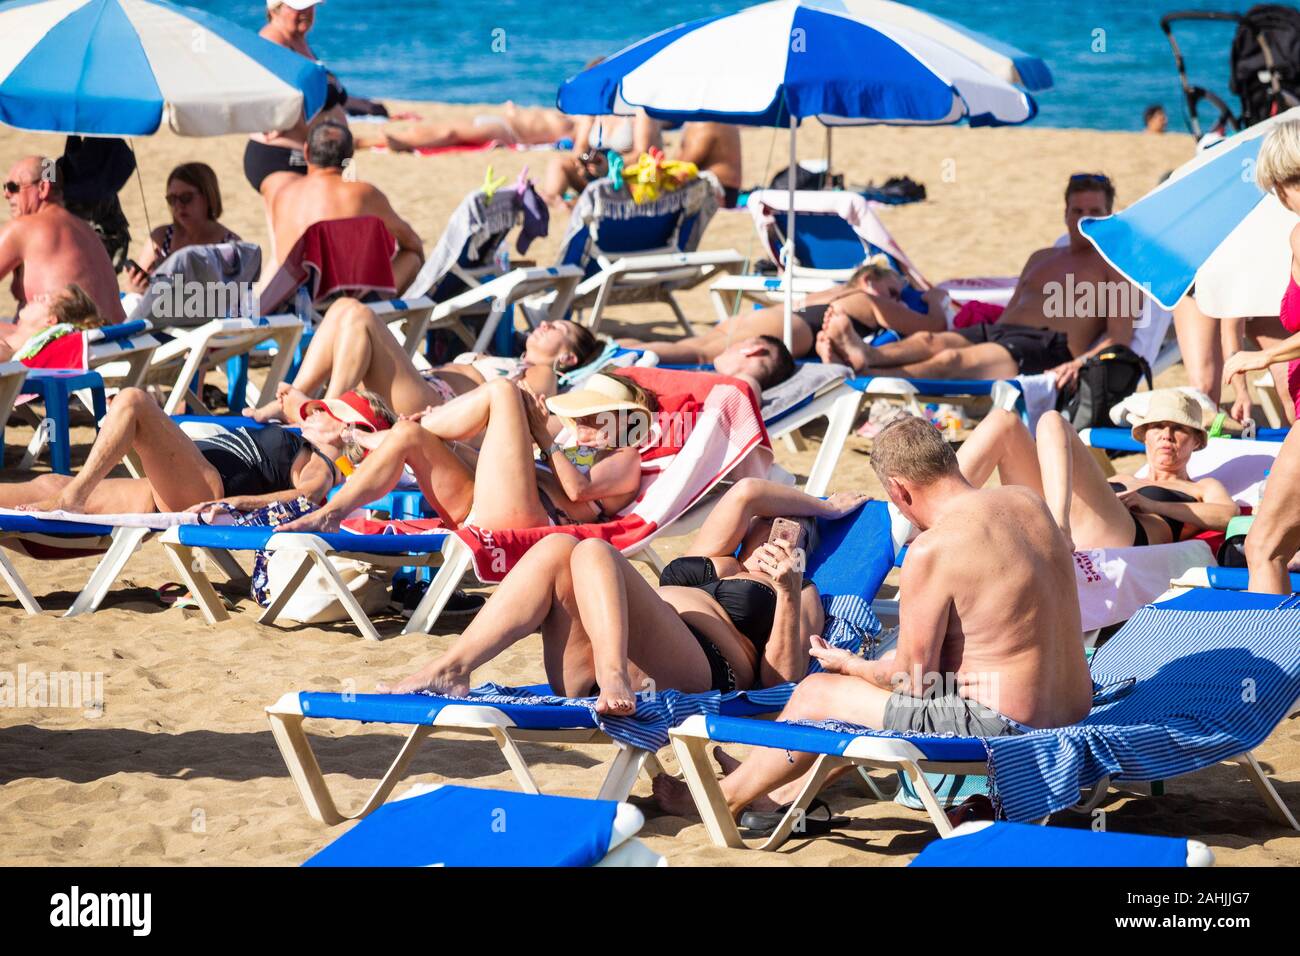 Tourists sunbathing on beach in Spain Stock Photo - Alamy